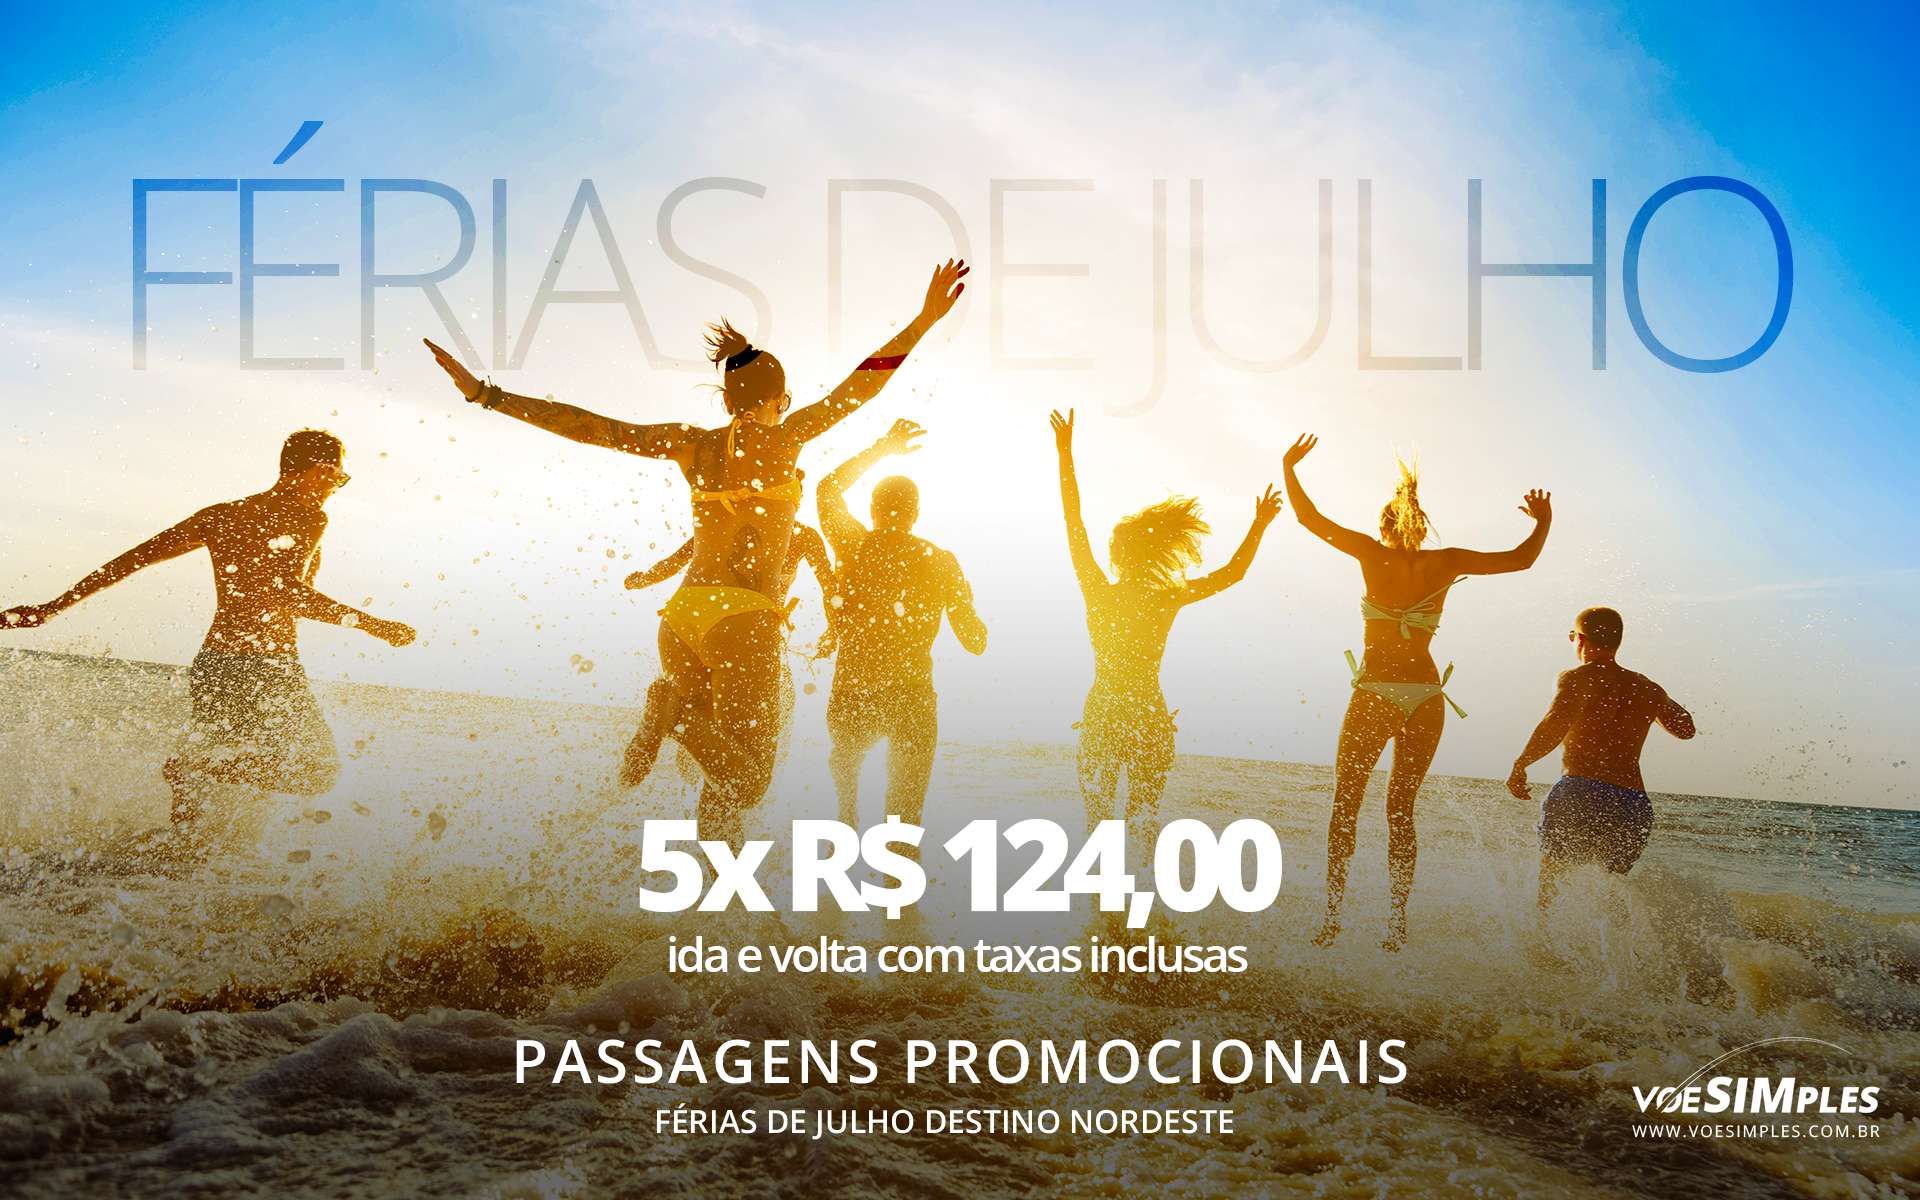 passagem-aerea-promocional-nordeste-brasil-ferias-julho-voe-simples-promo-sdfull